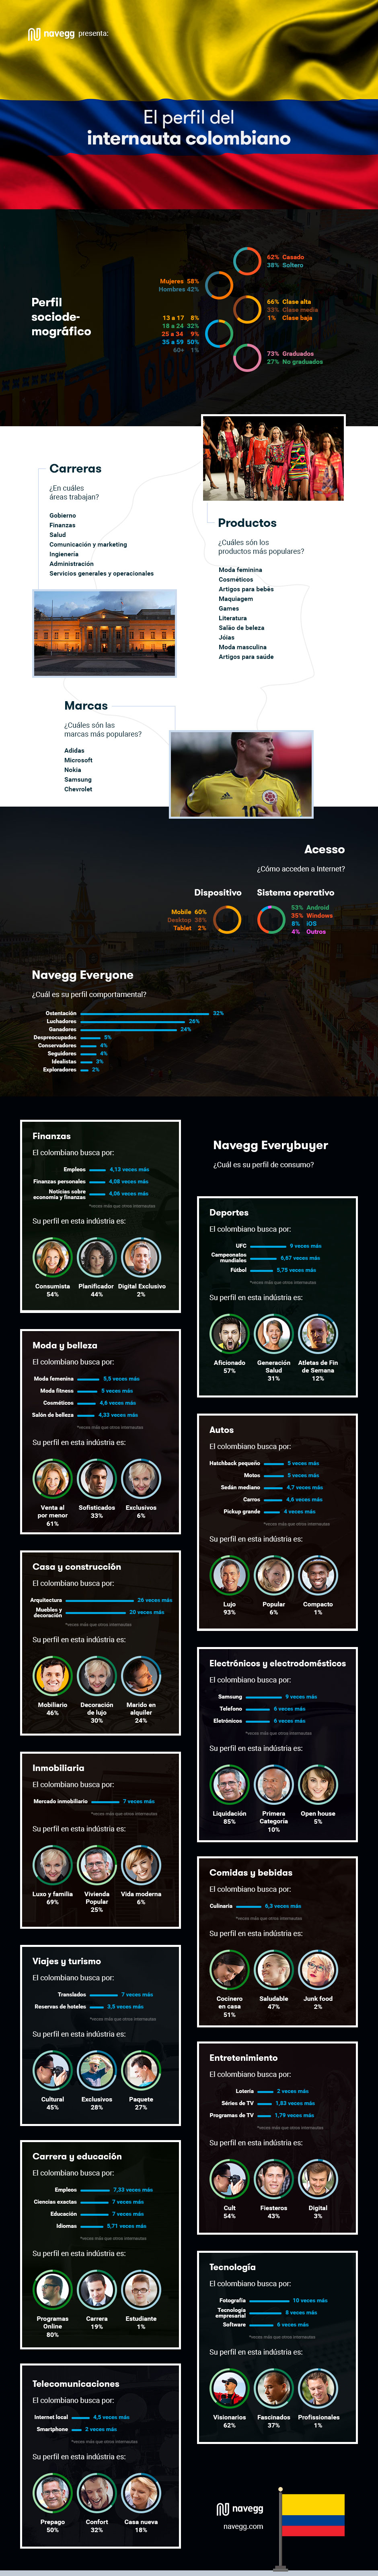 navegg-infografico-el-perfil-del-internauta-colombiano